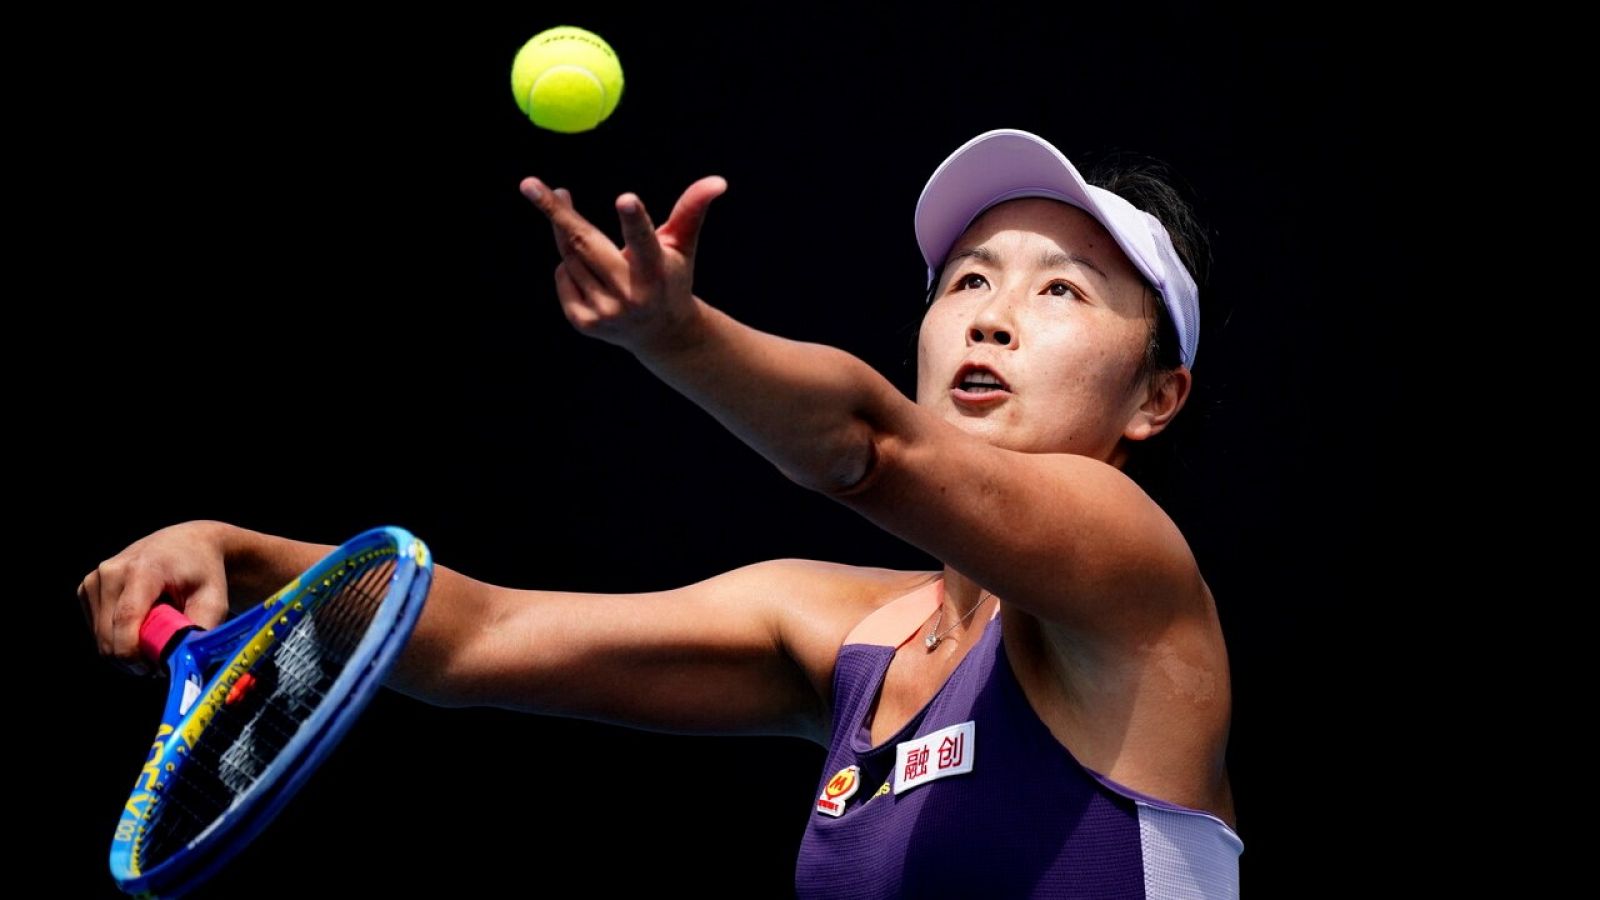 La WTA cancela sus torneos en China por Peng Shuai